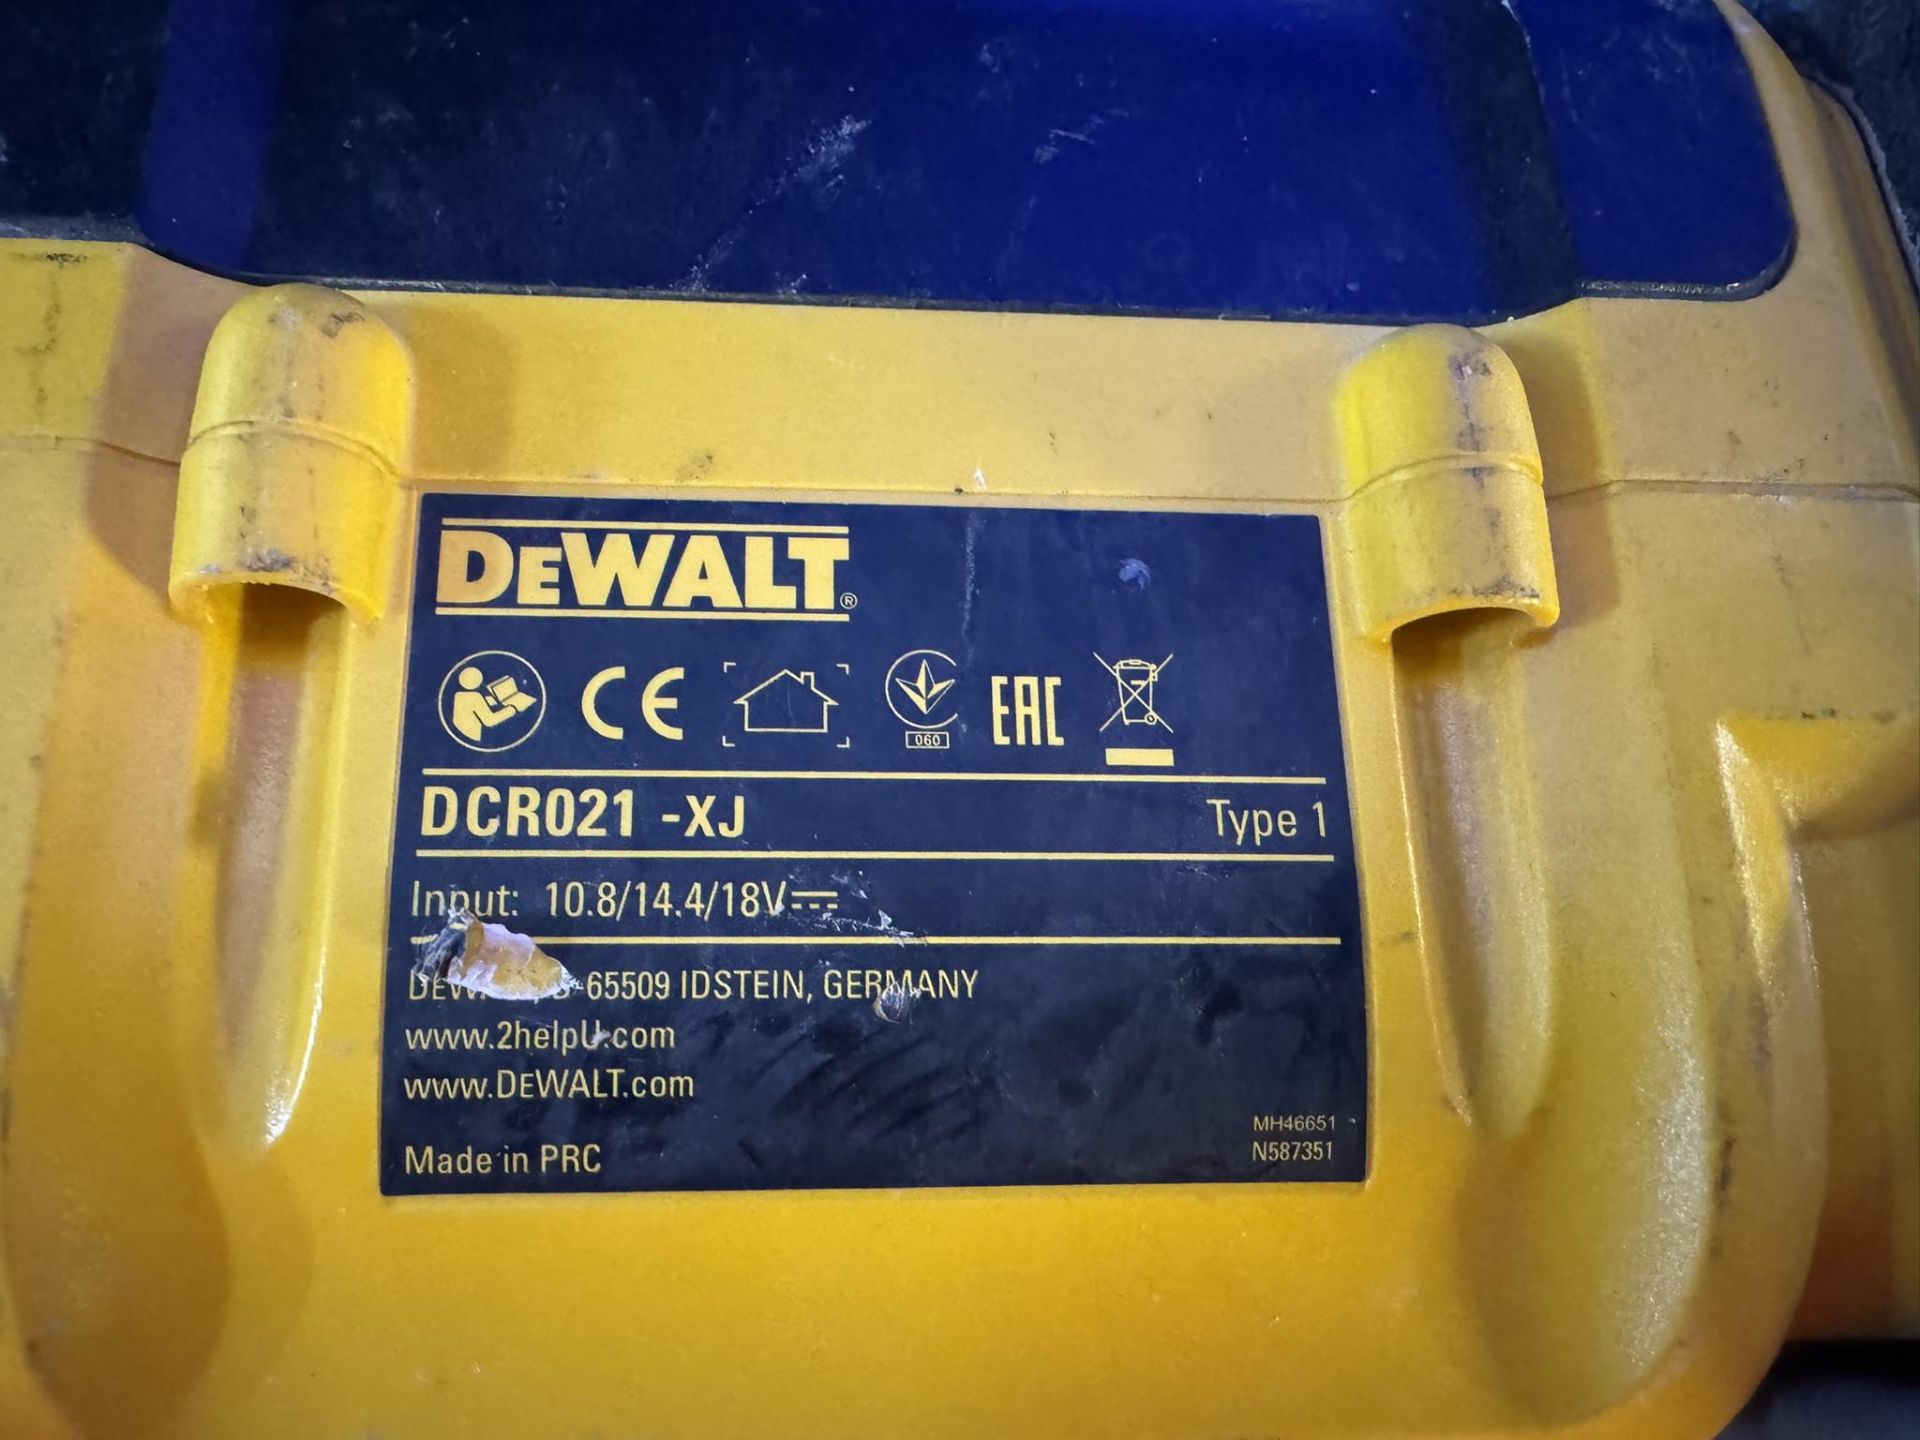 Dewalt DCR021-XJ AUX Speaker - Image 4 of 4